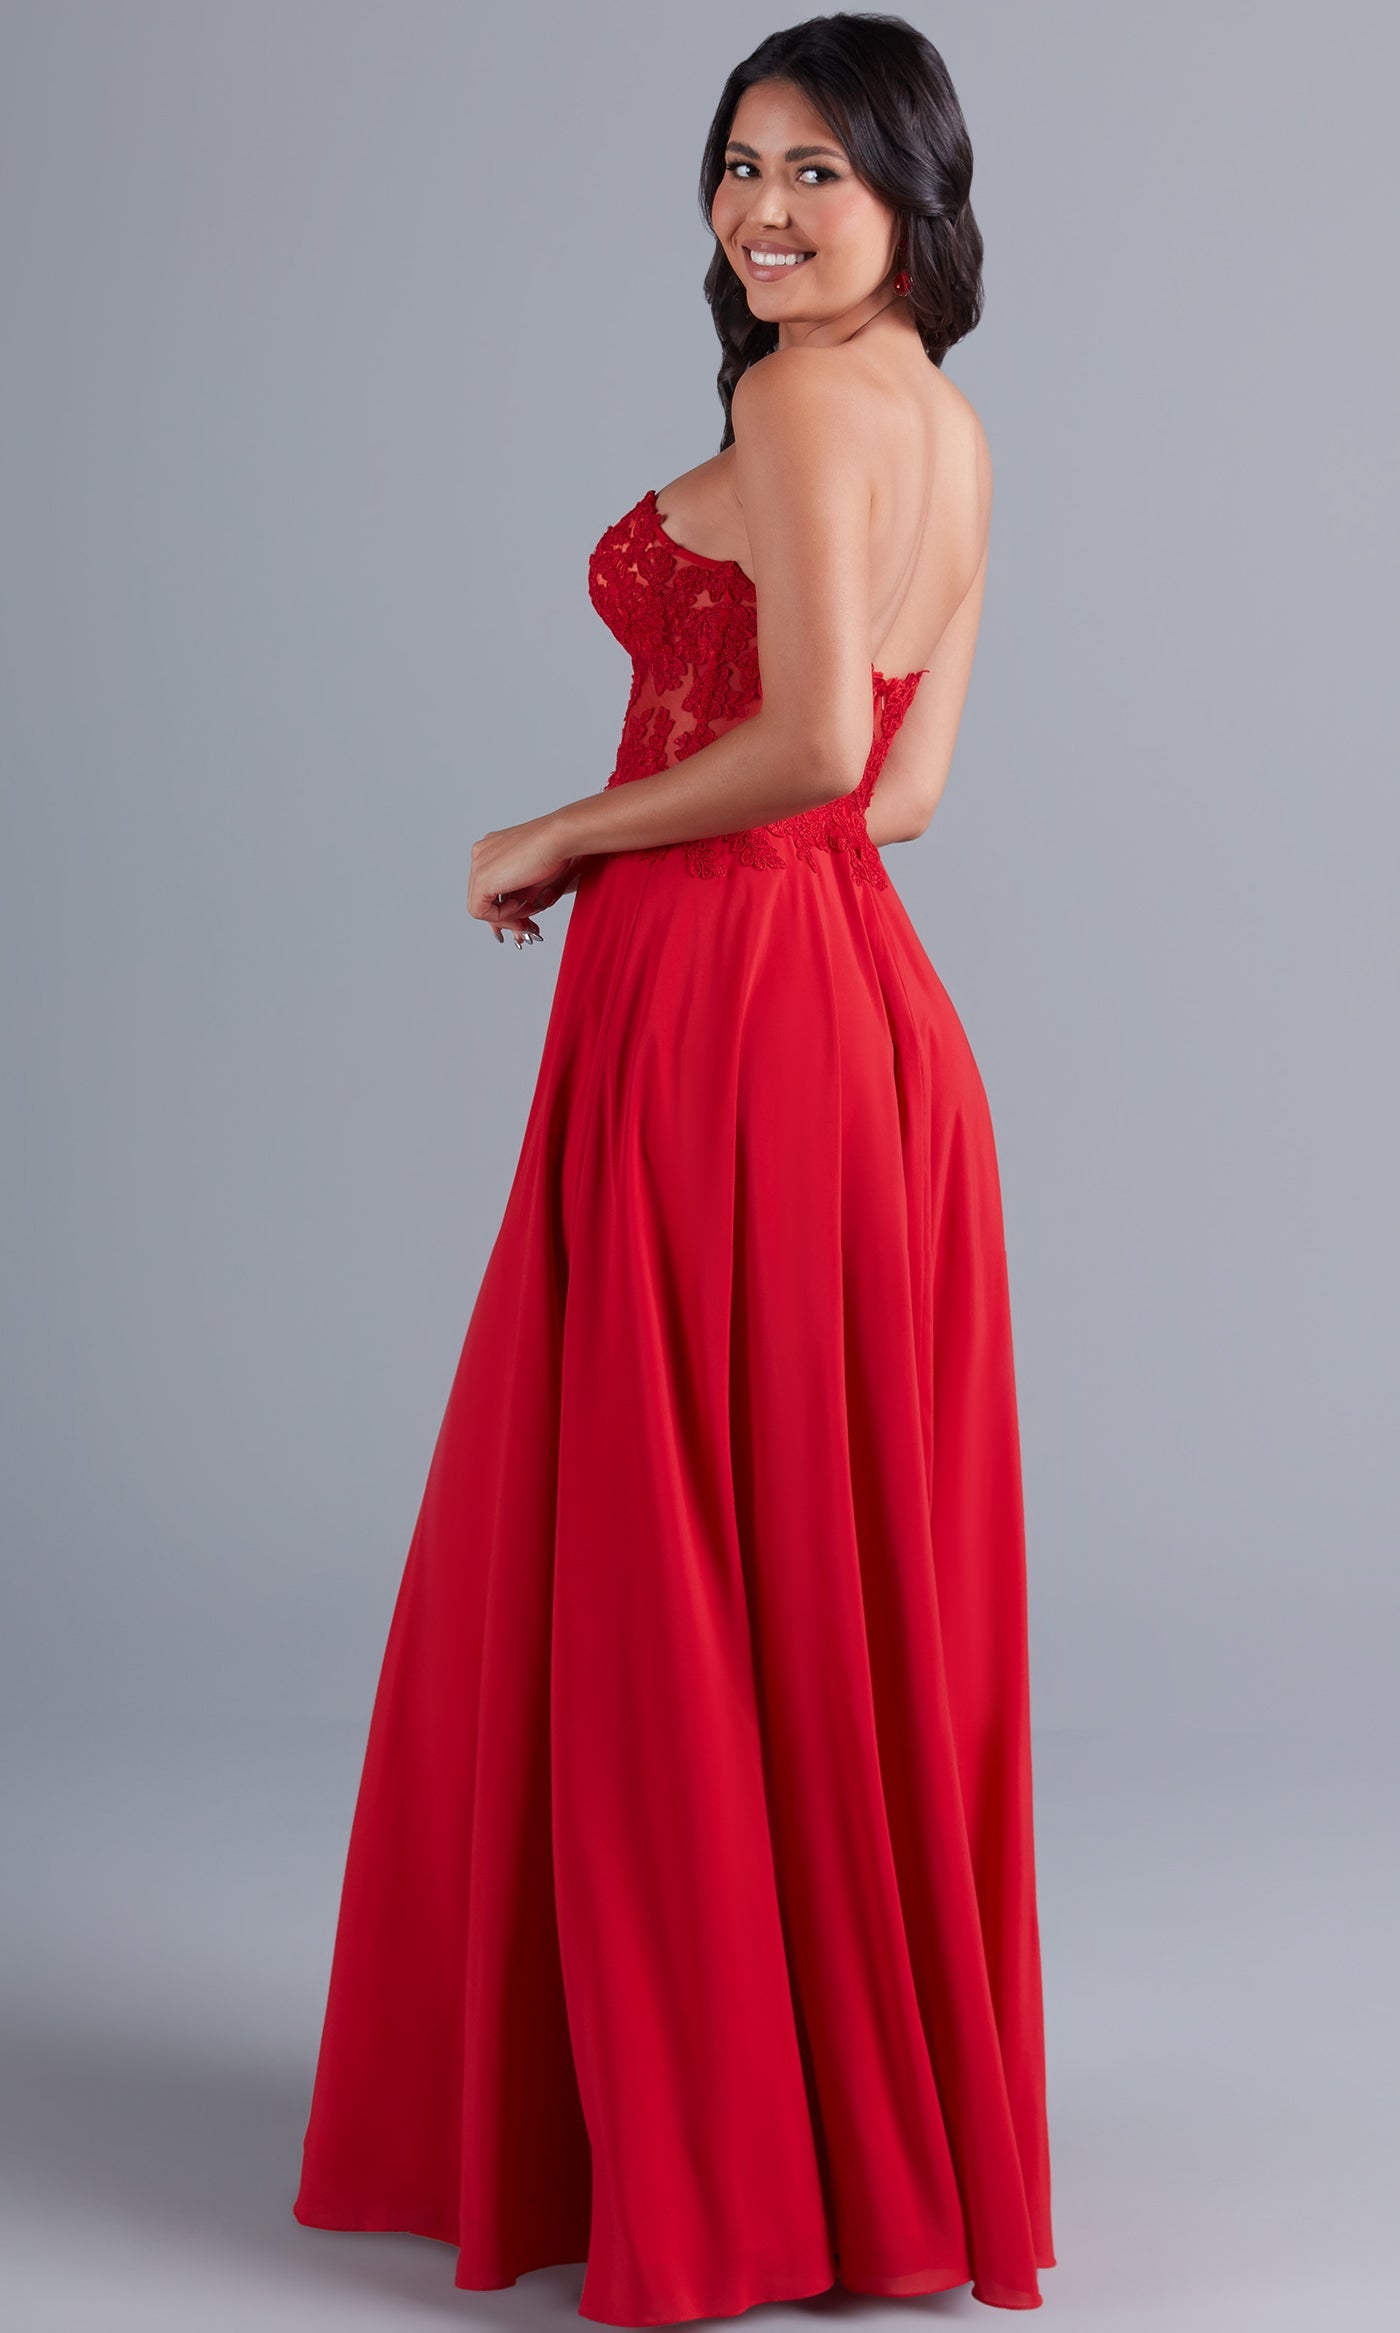  Red Strapless Sheer-Bodice Long Prom Dress